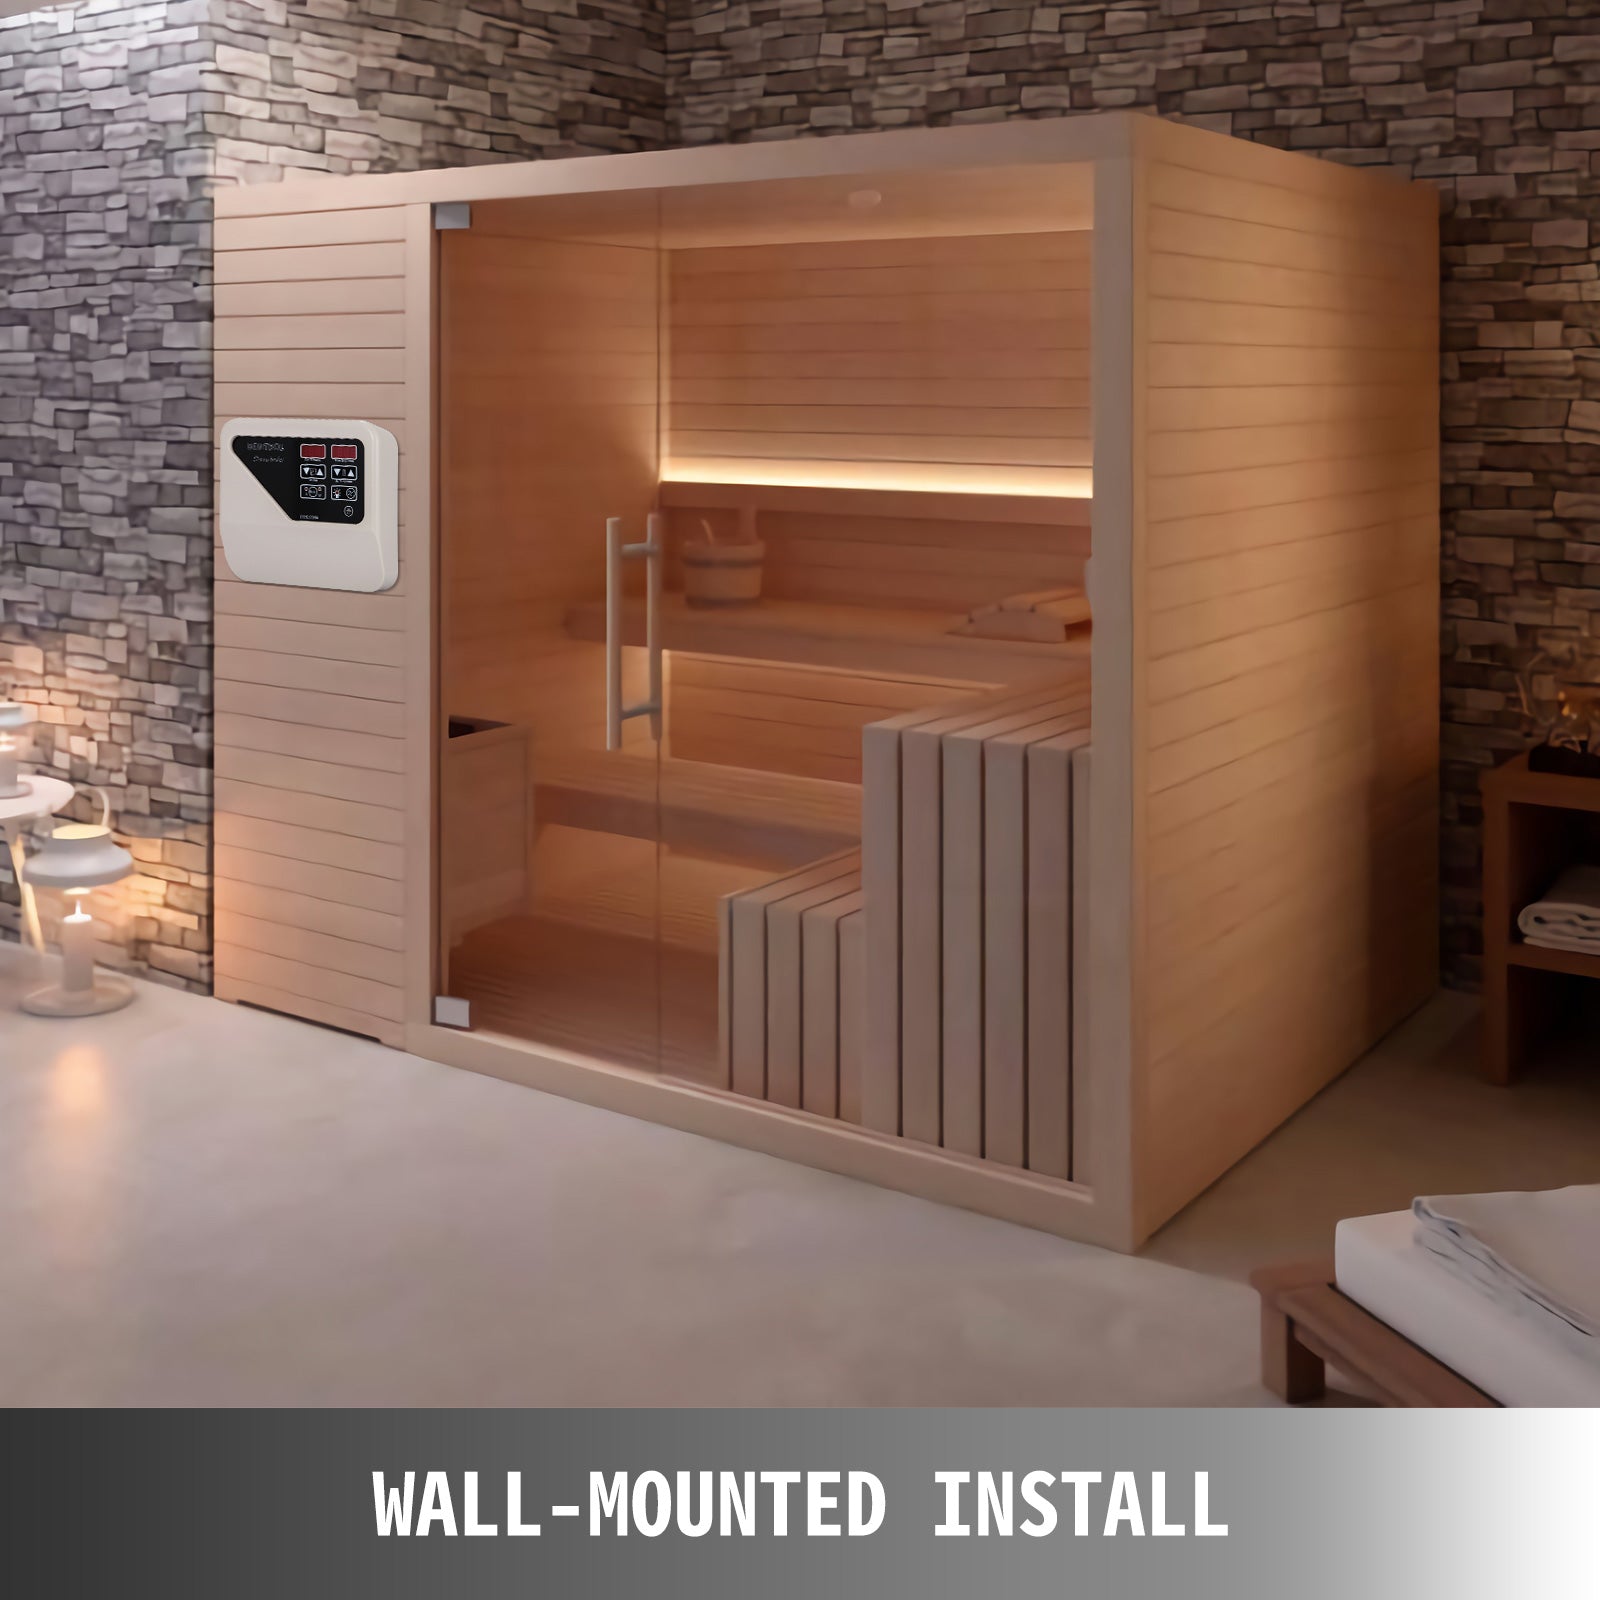 Sauna Digital Controller, Time & Temp Settings, Wall Mounted